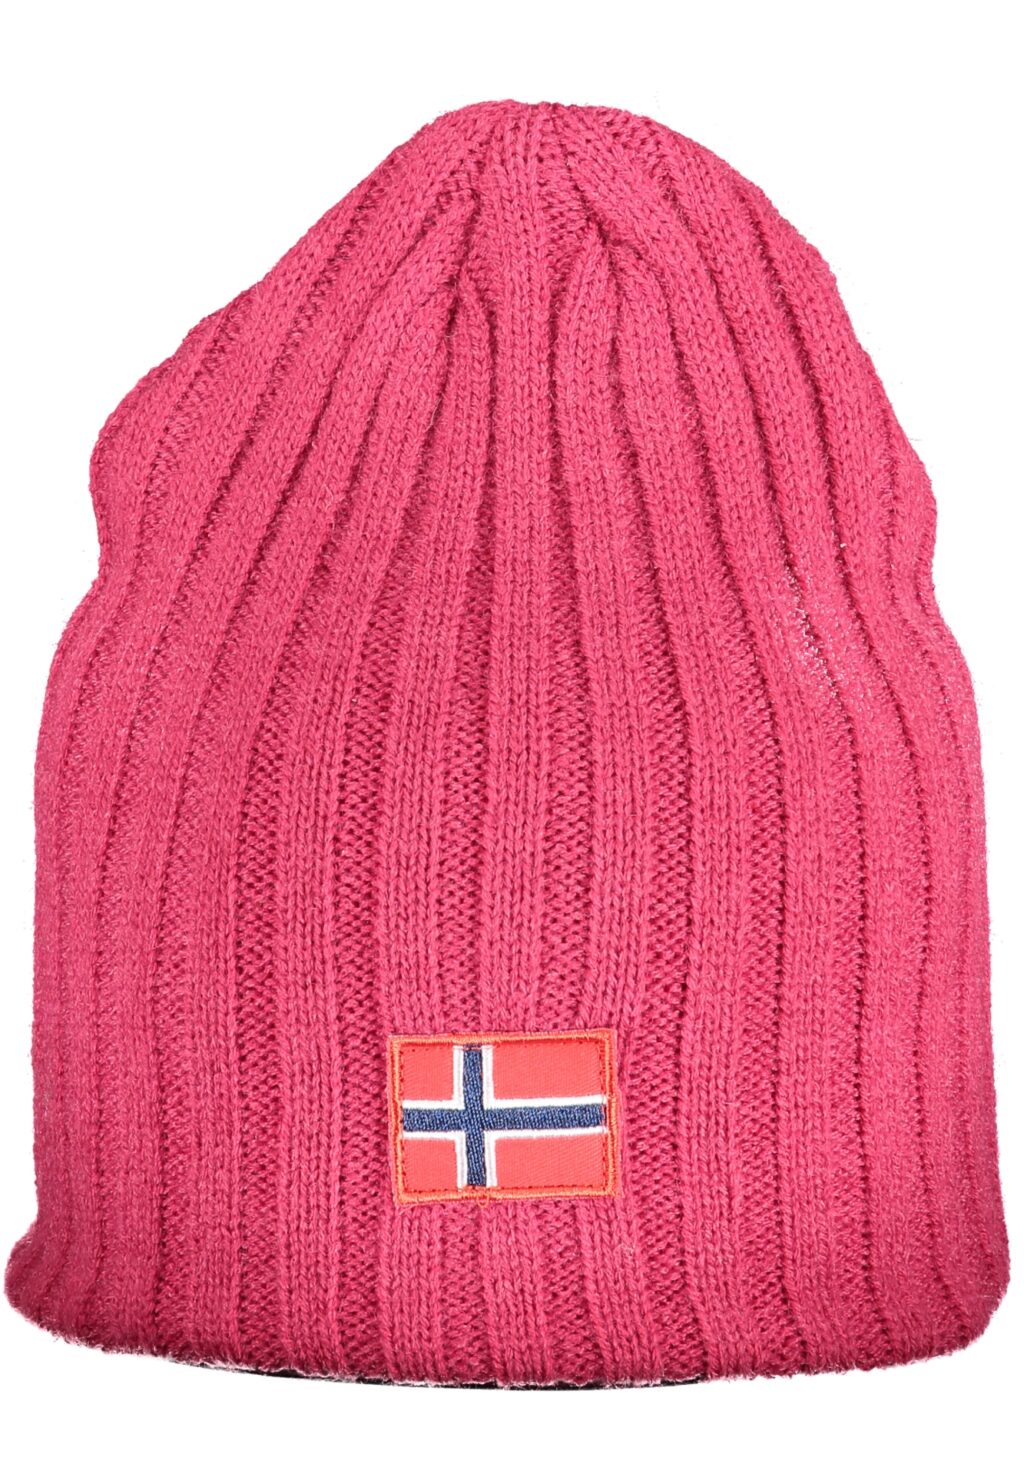 NORWAY 1963 PINK MEN'S CAP 120105_RSCILIEGIA